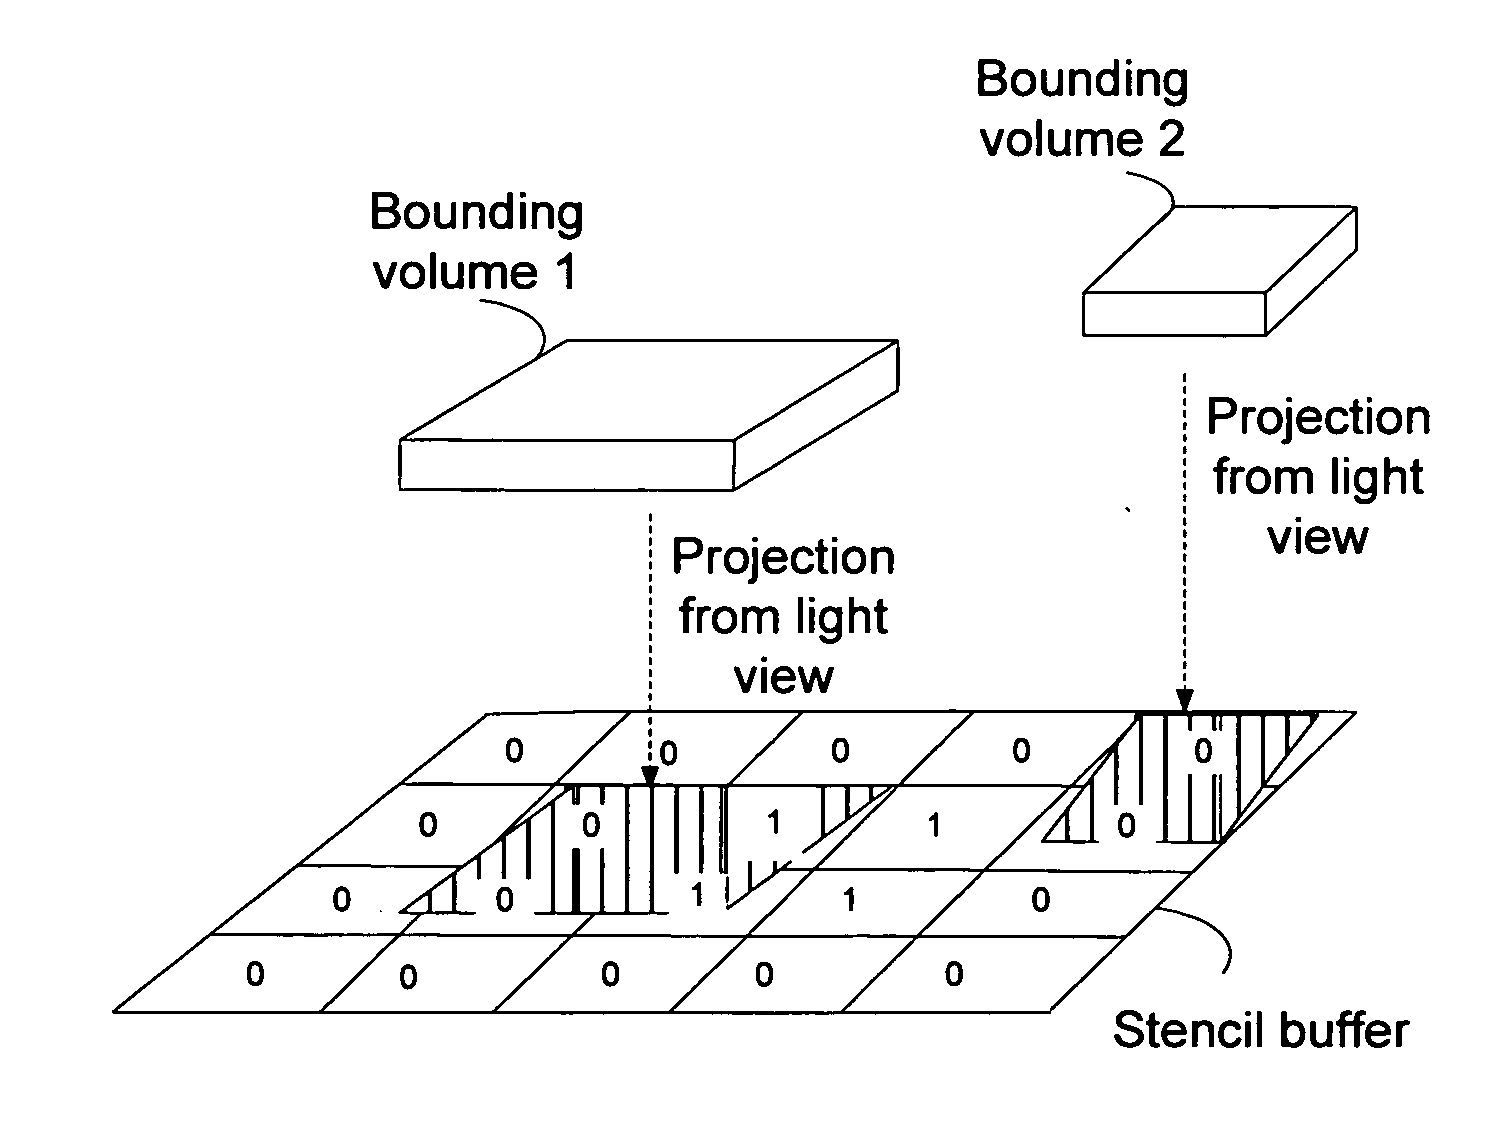 Image processing techniques